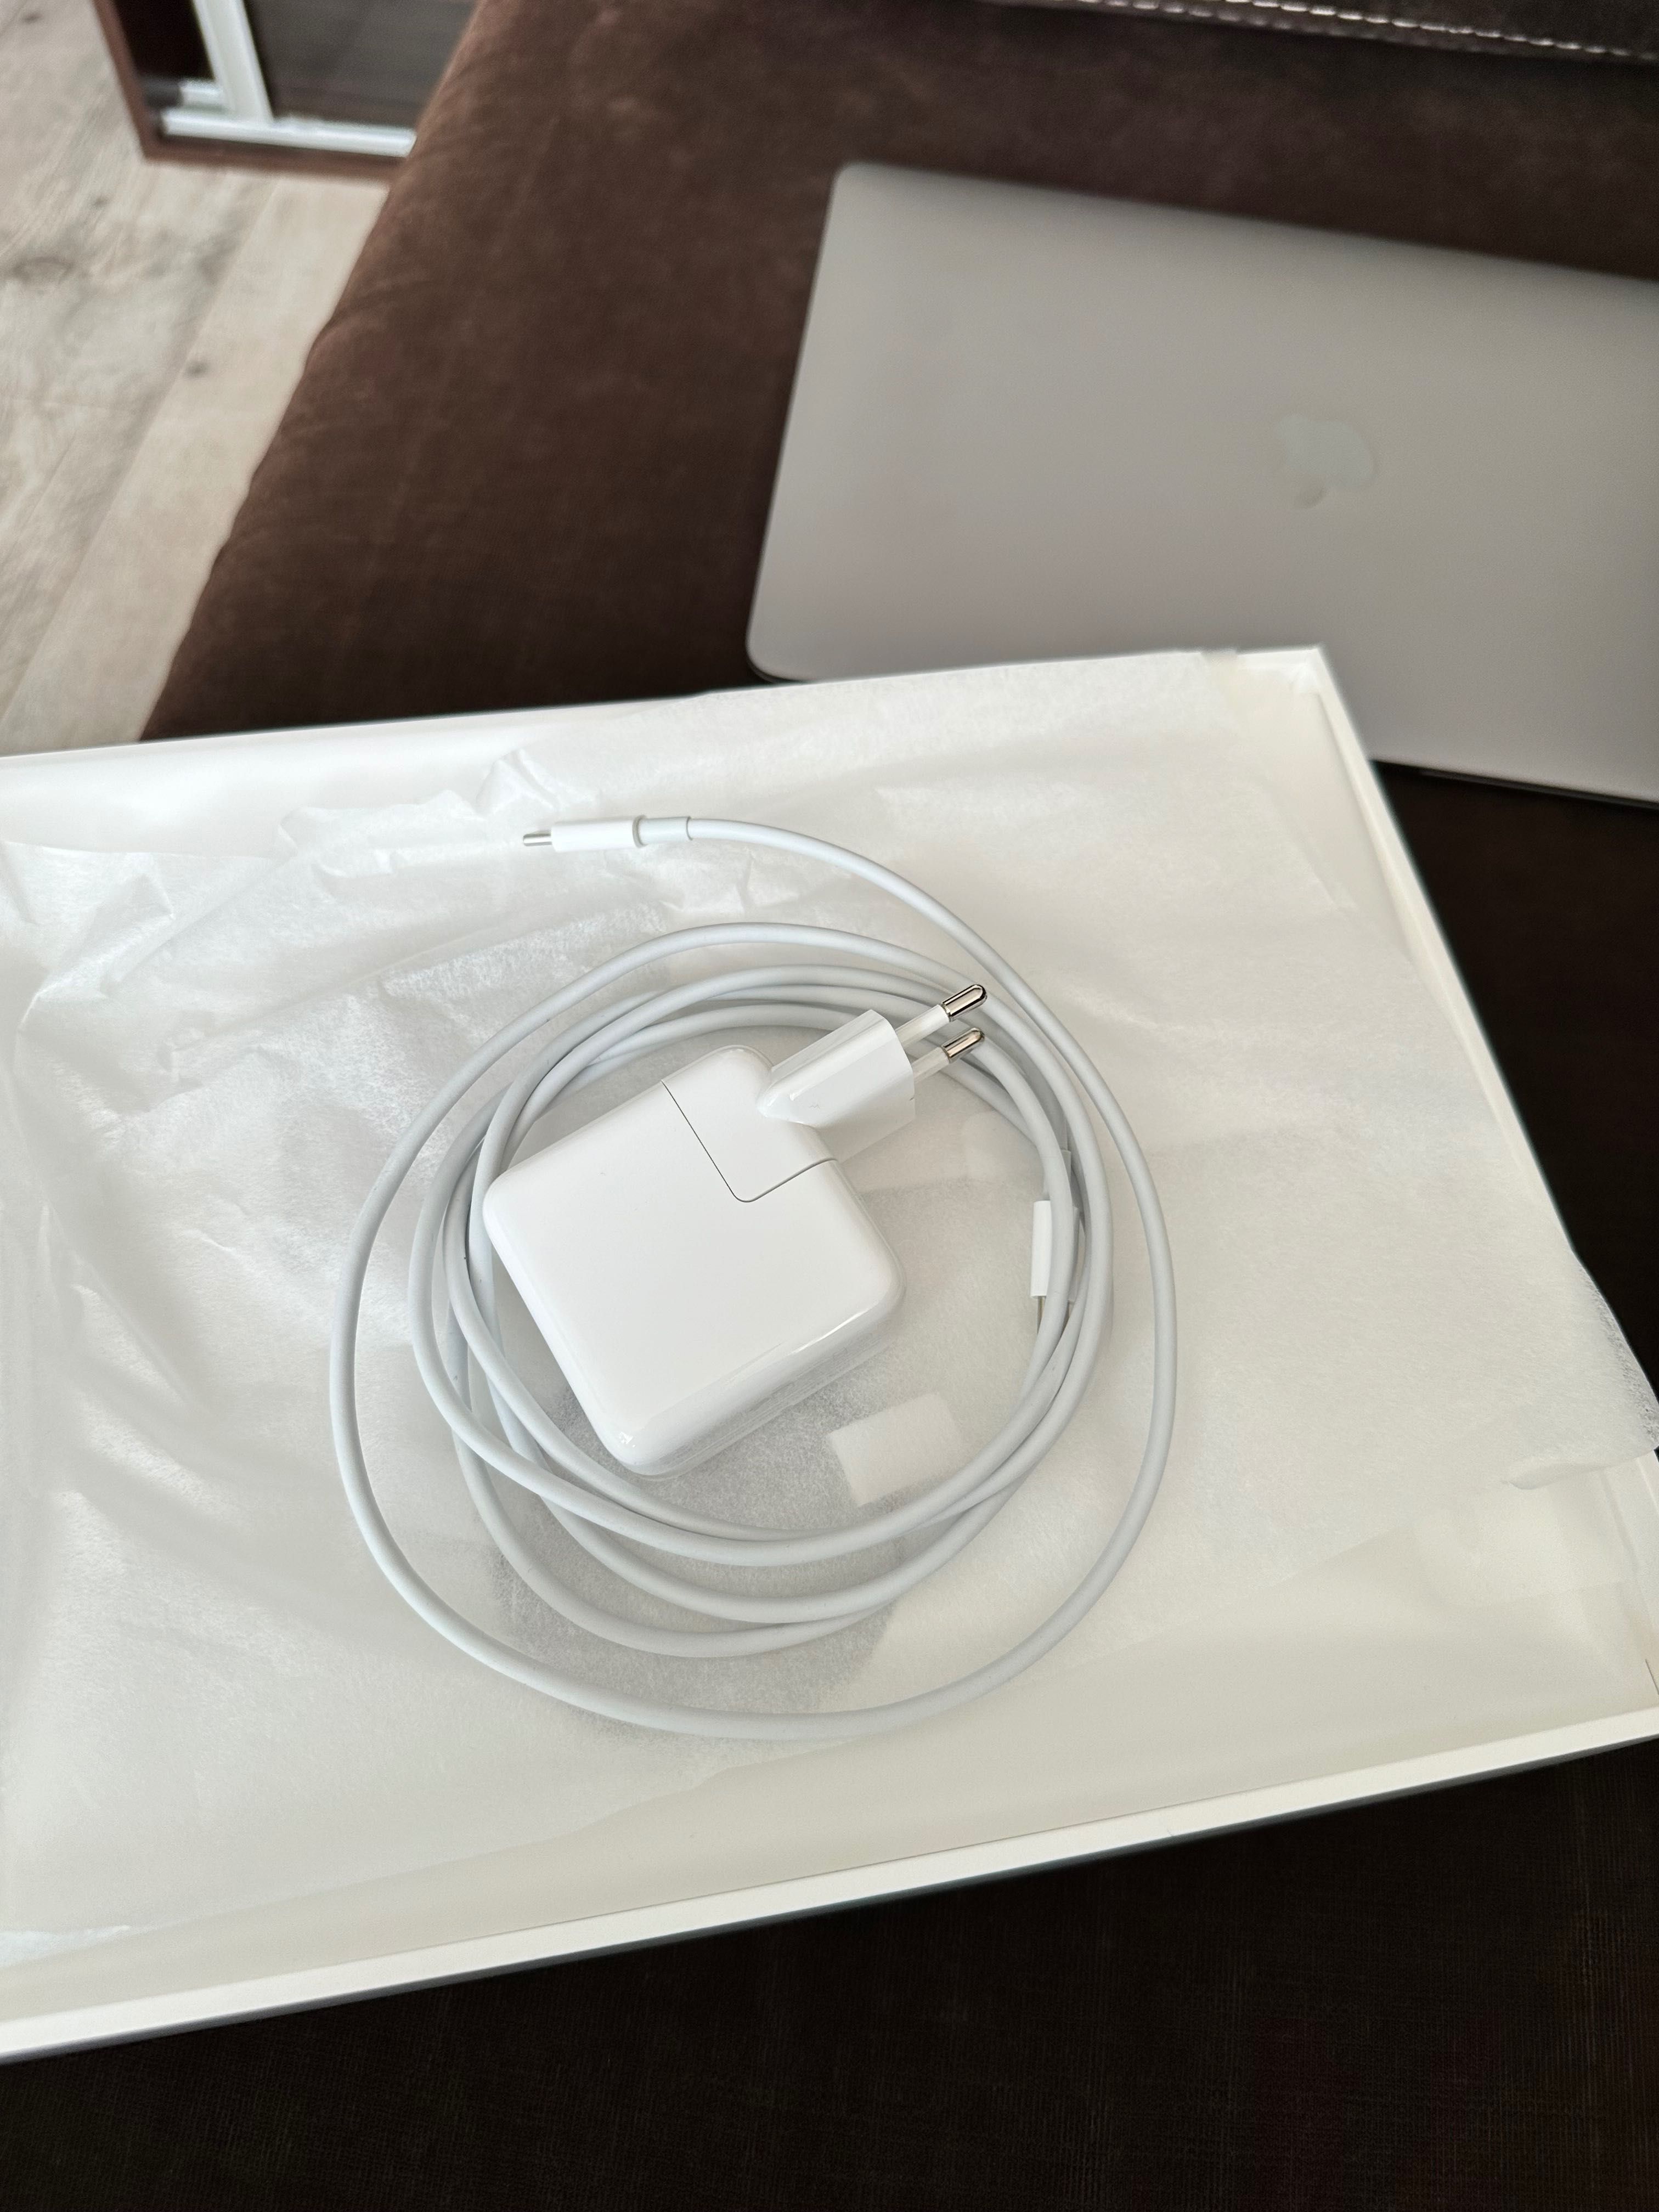 Macbook Air M1 8/256GB idealny, 11 miesiecy rękojmi media expert